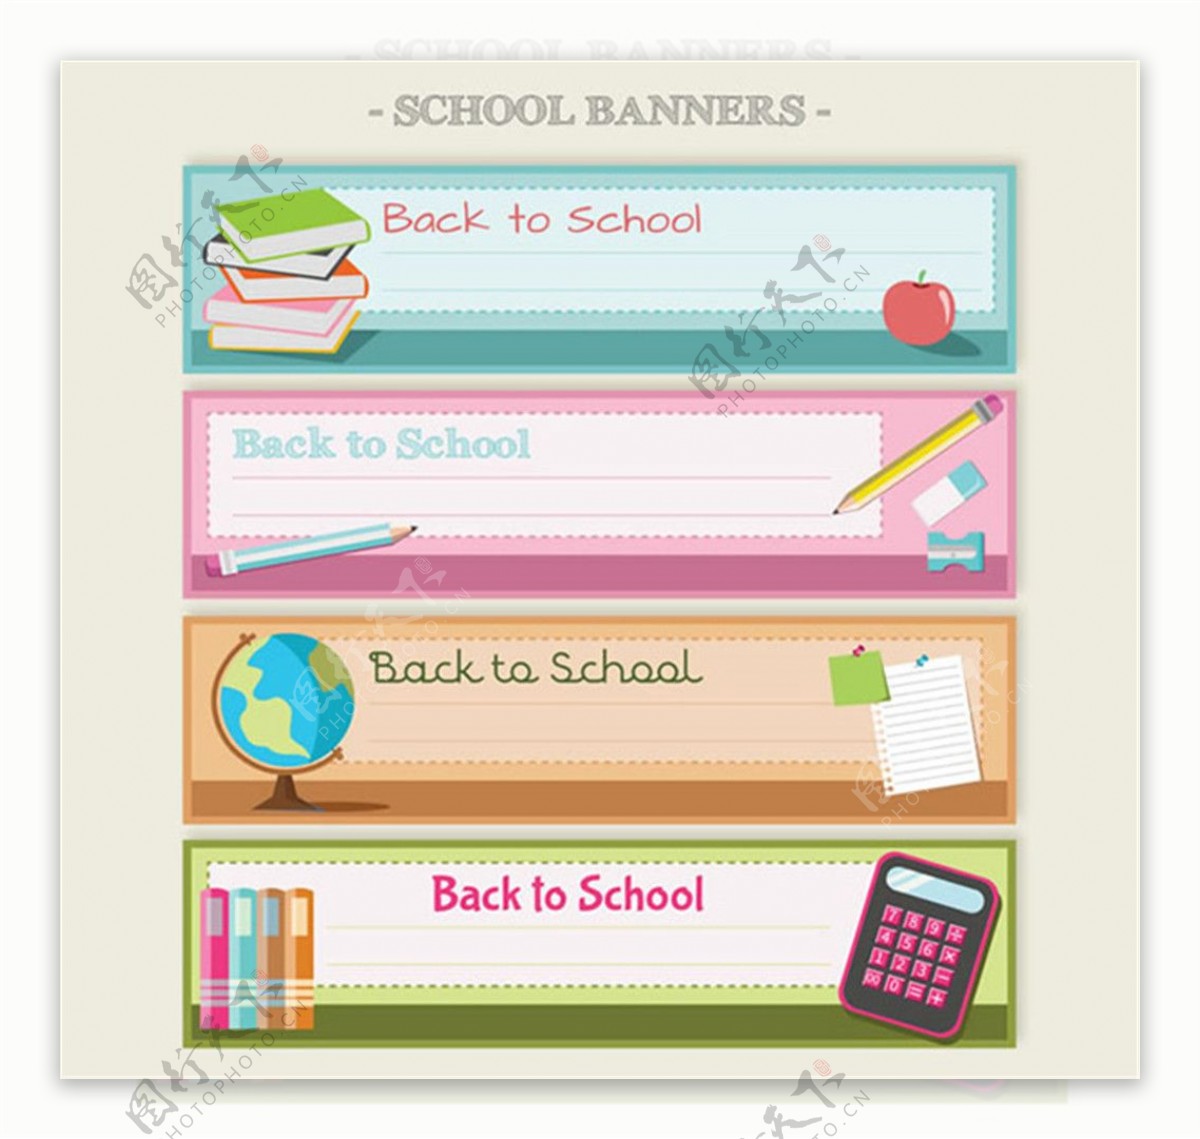 学校网站banner